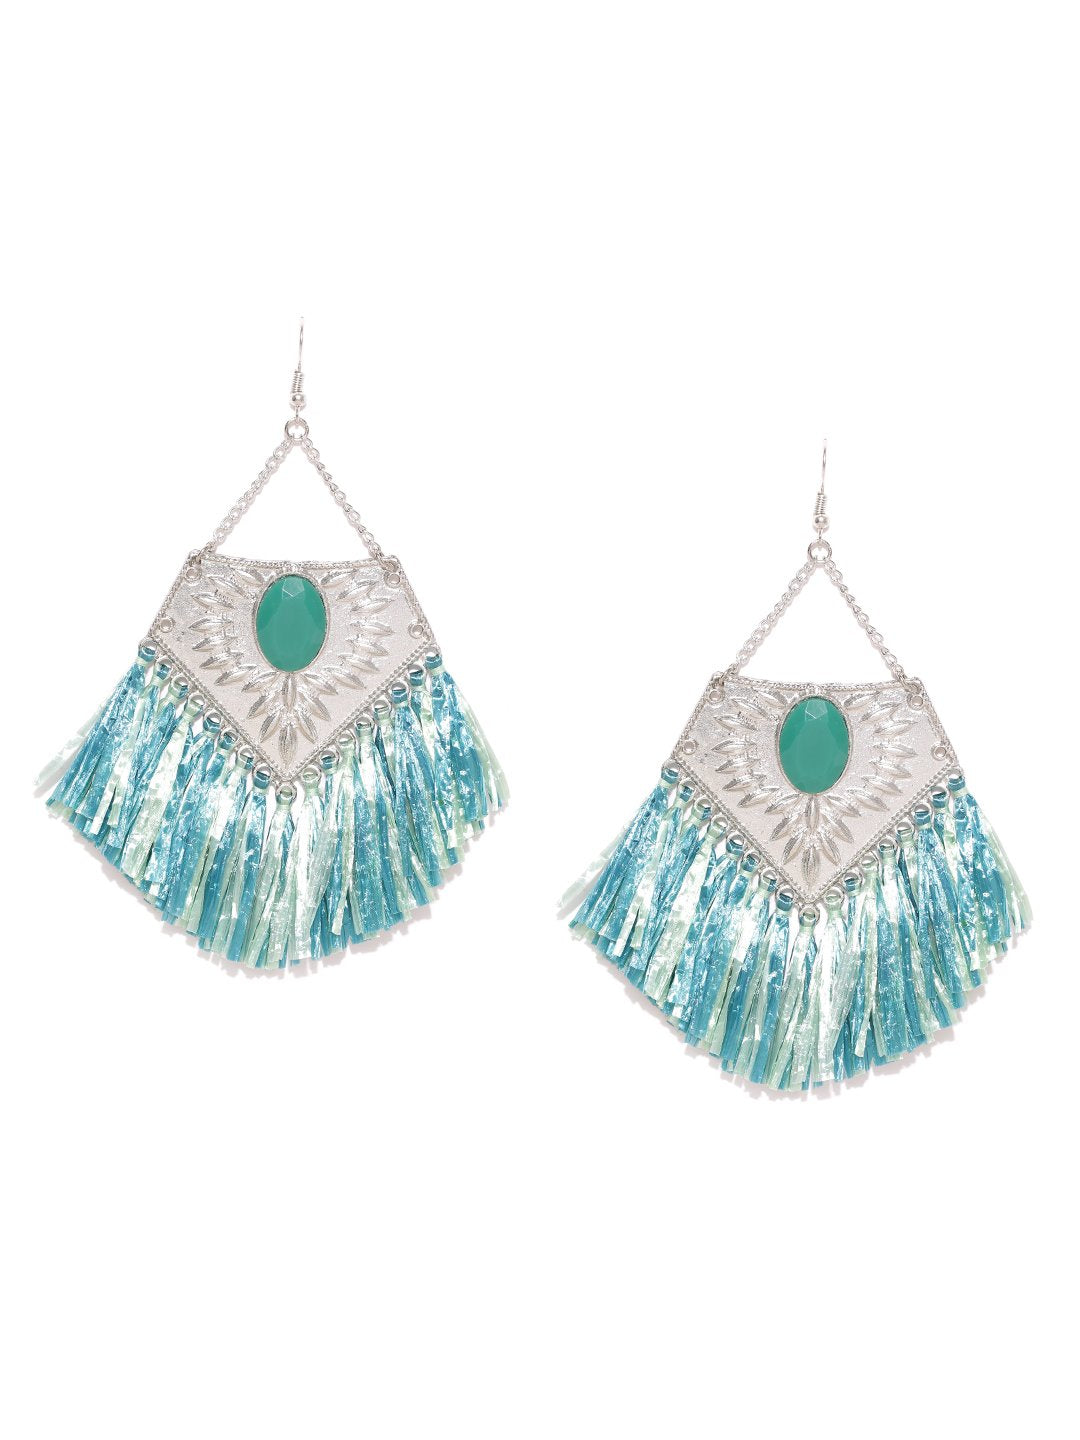 Blueberry silver and green tassel earrings